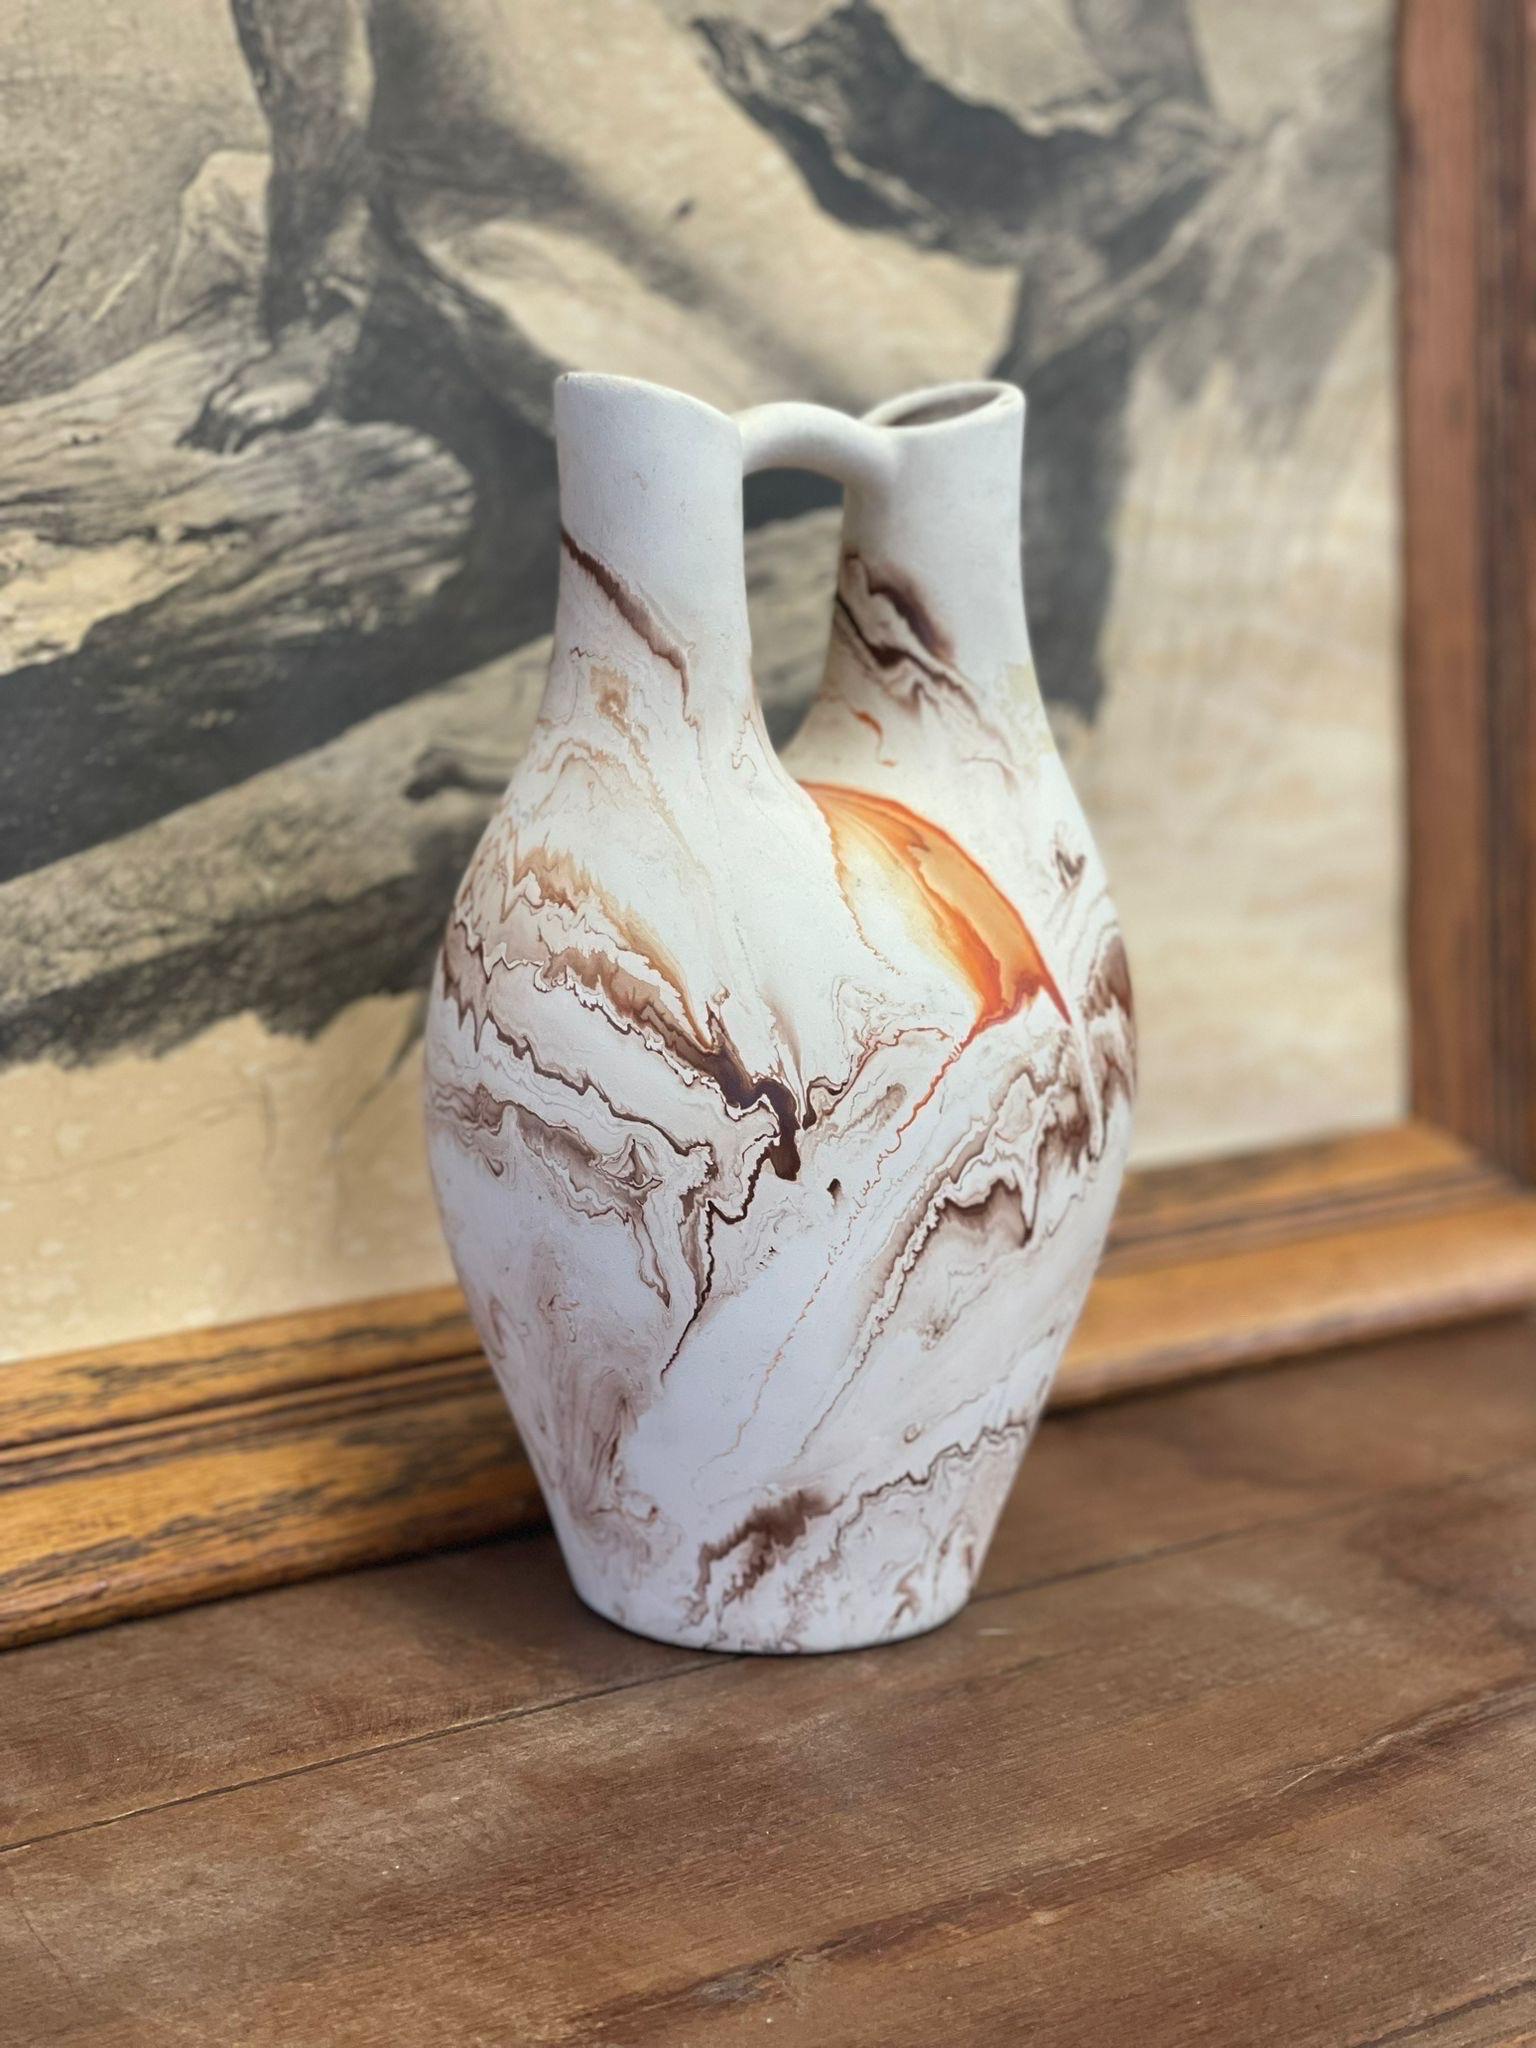 Vintage Handmade Double Spout Nemadji Vase Minnesota Multicolored Stamped ceramic vase antique pottery orange and blue designed decor

Dimensions. 6 L ; 4 1/2 P ; 10 H